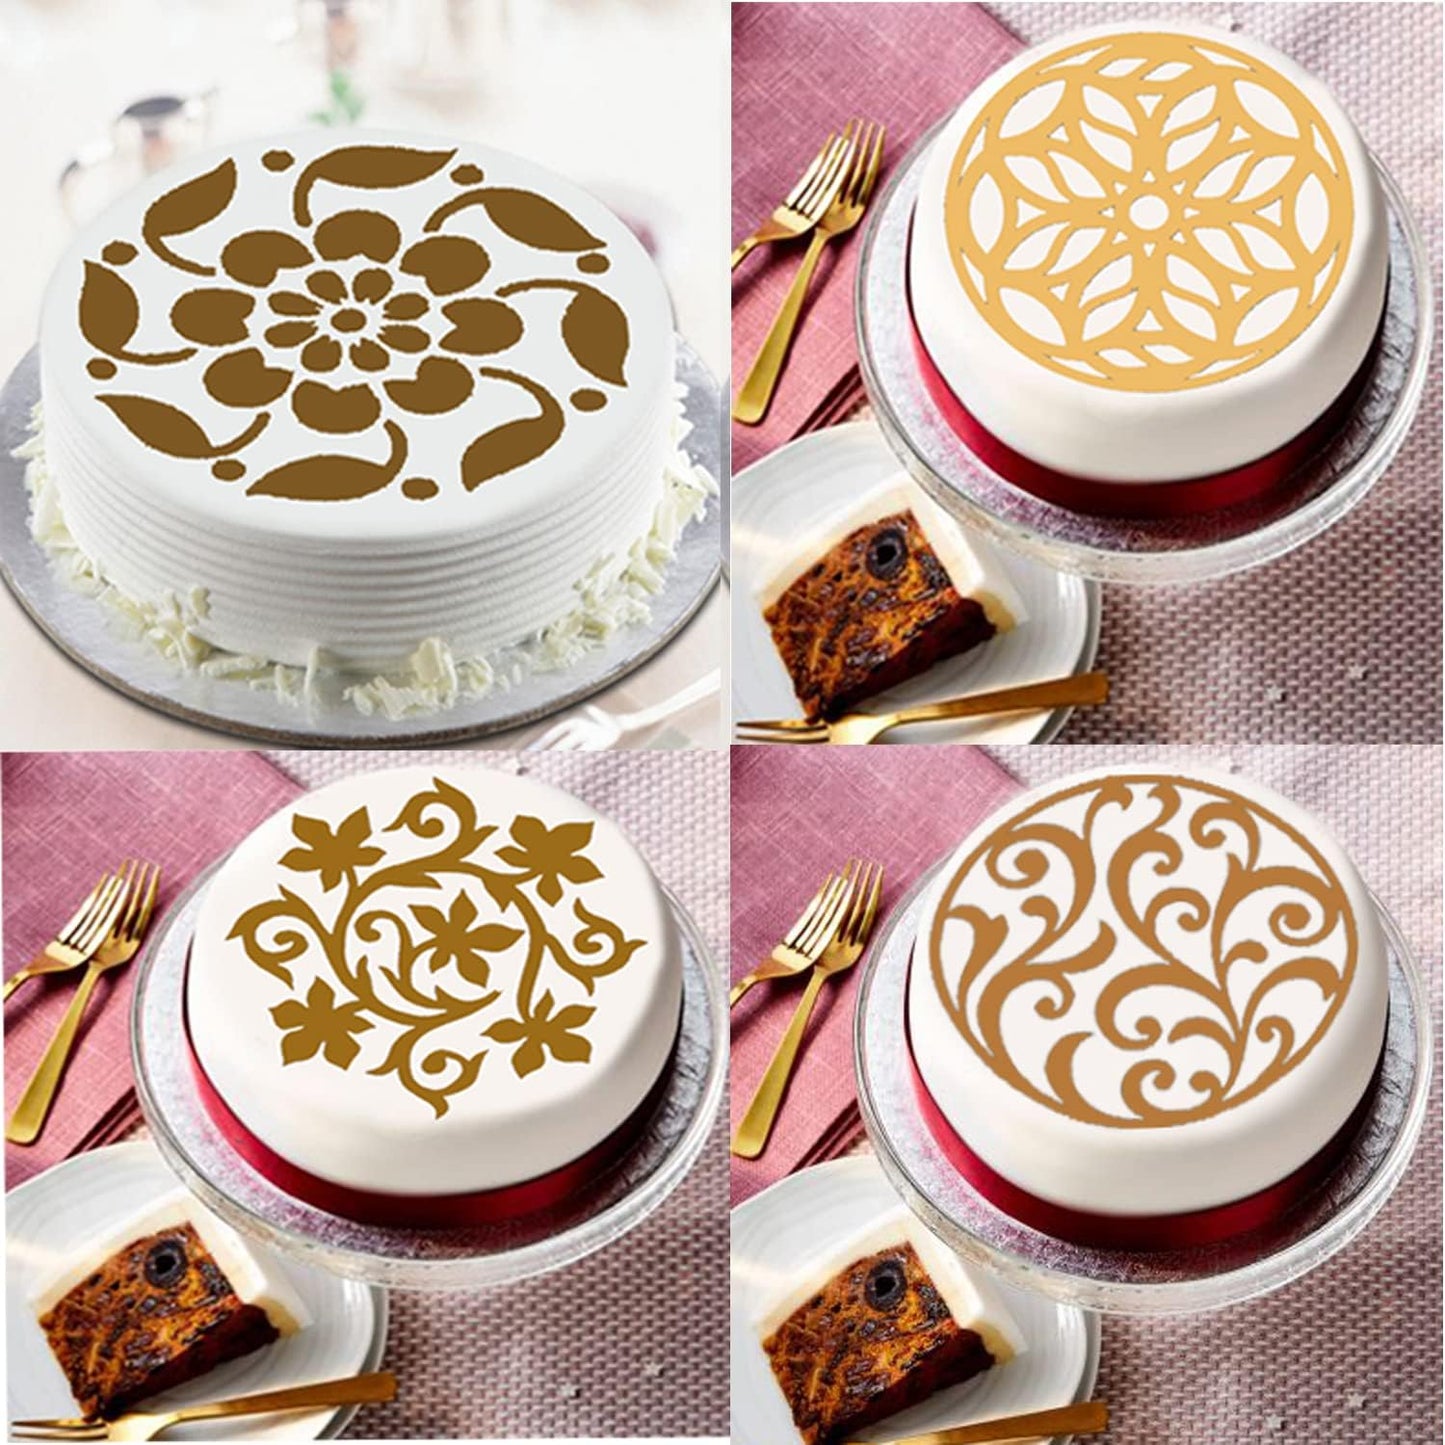 Top Cake Stencils Design 20 cm Pack of 4